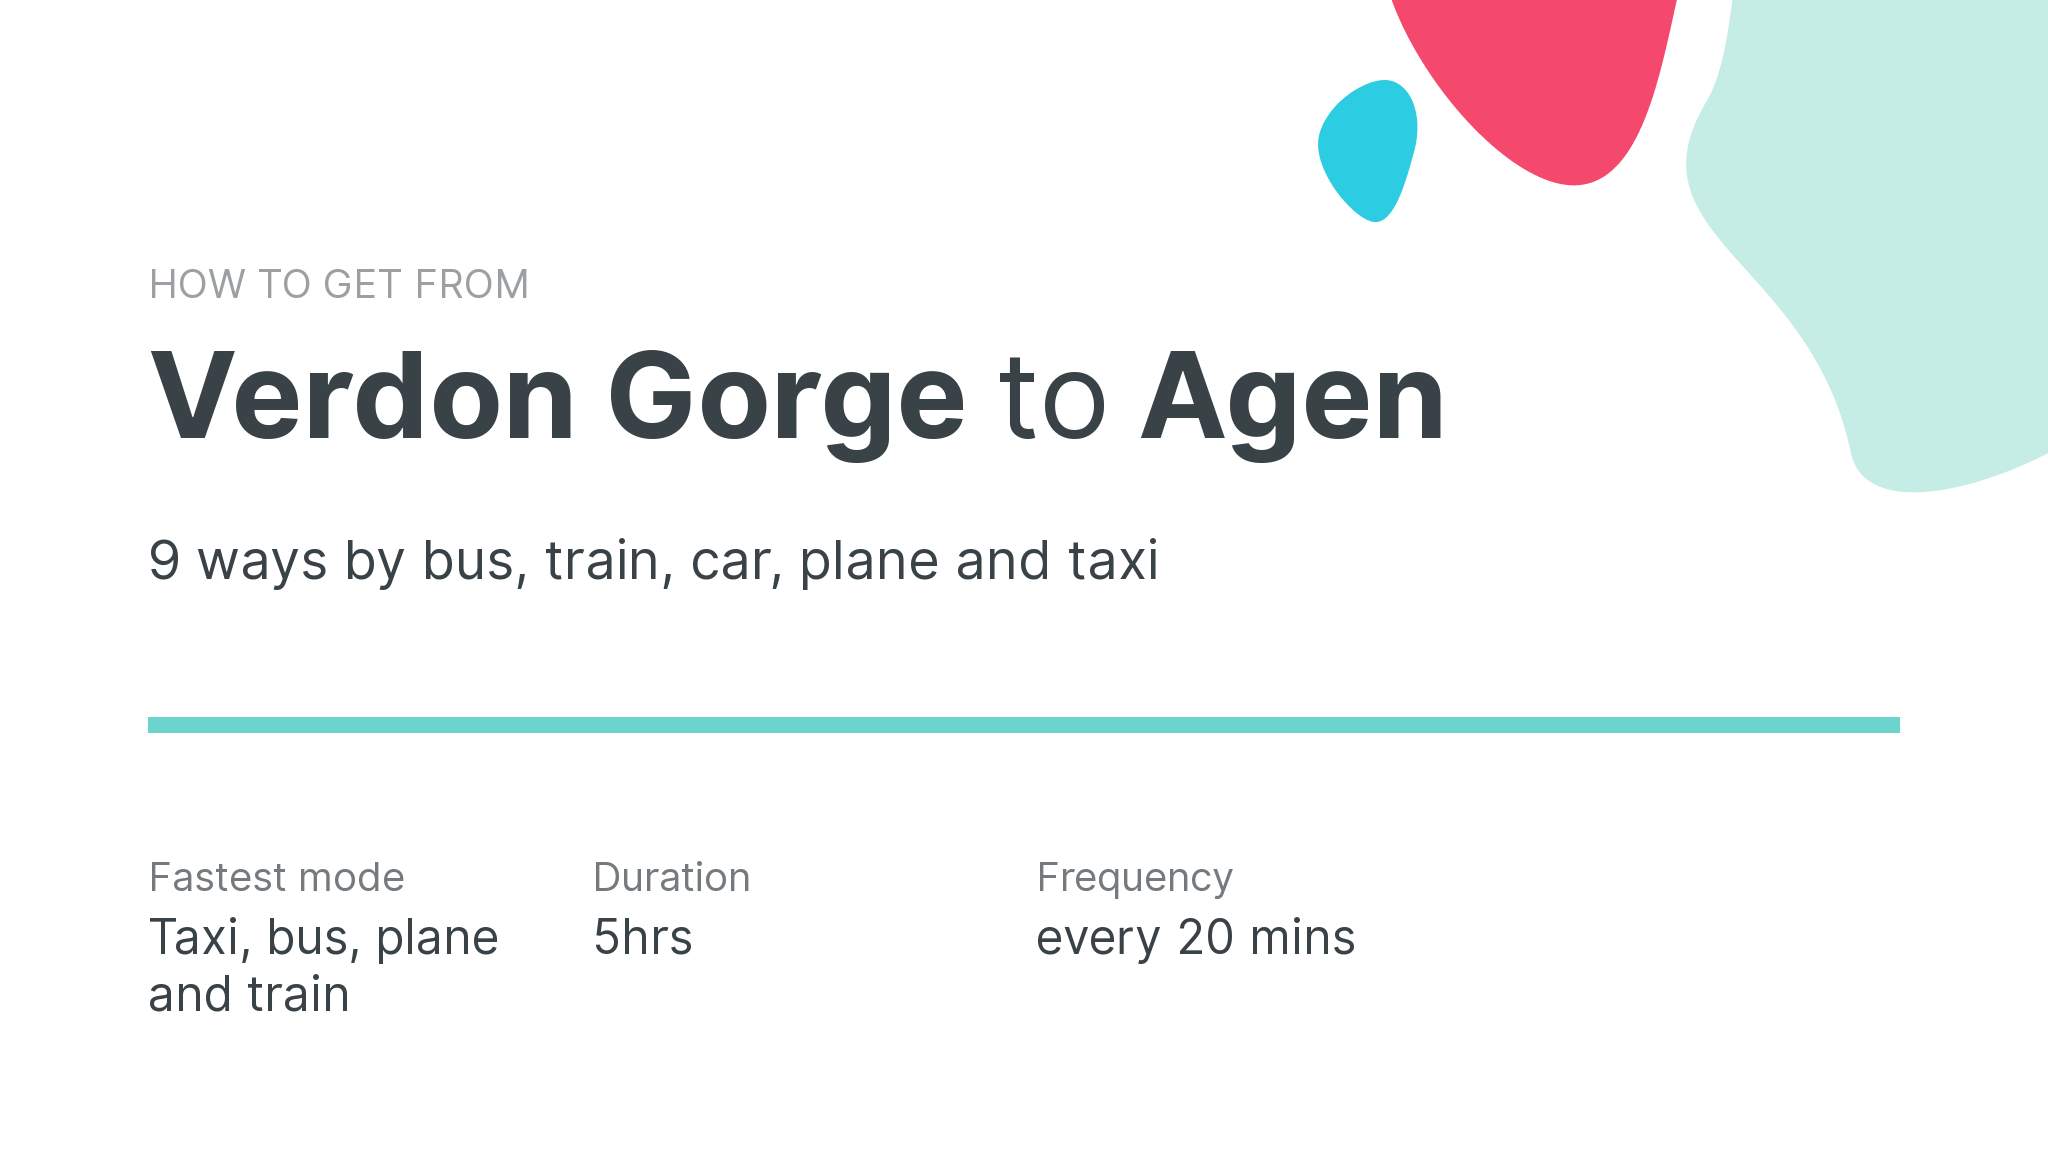 How do I get from Verdon Gorge to Agen